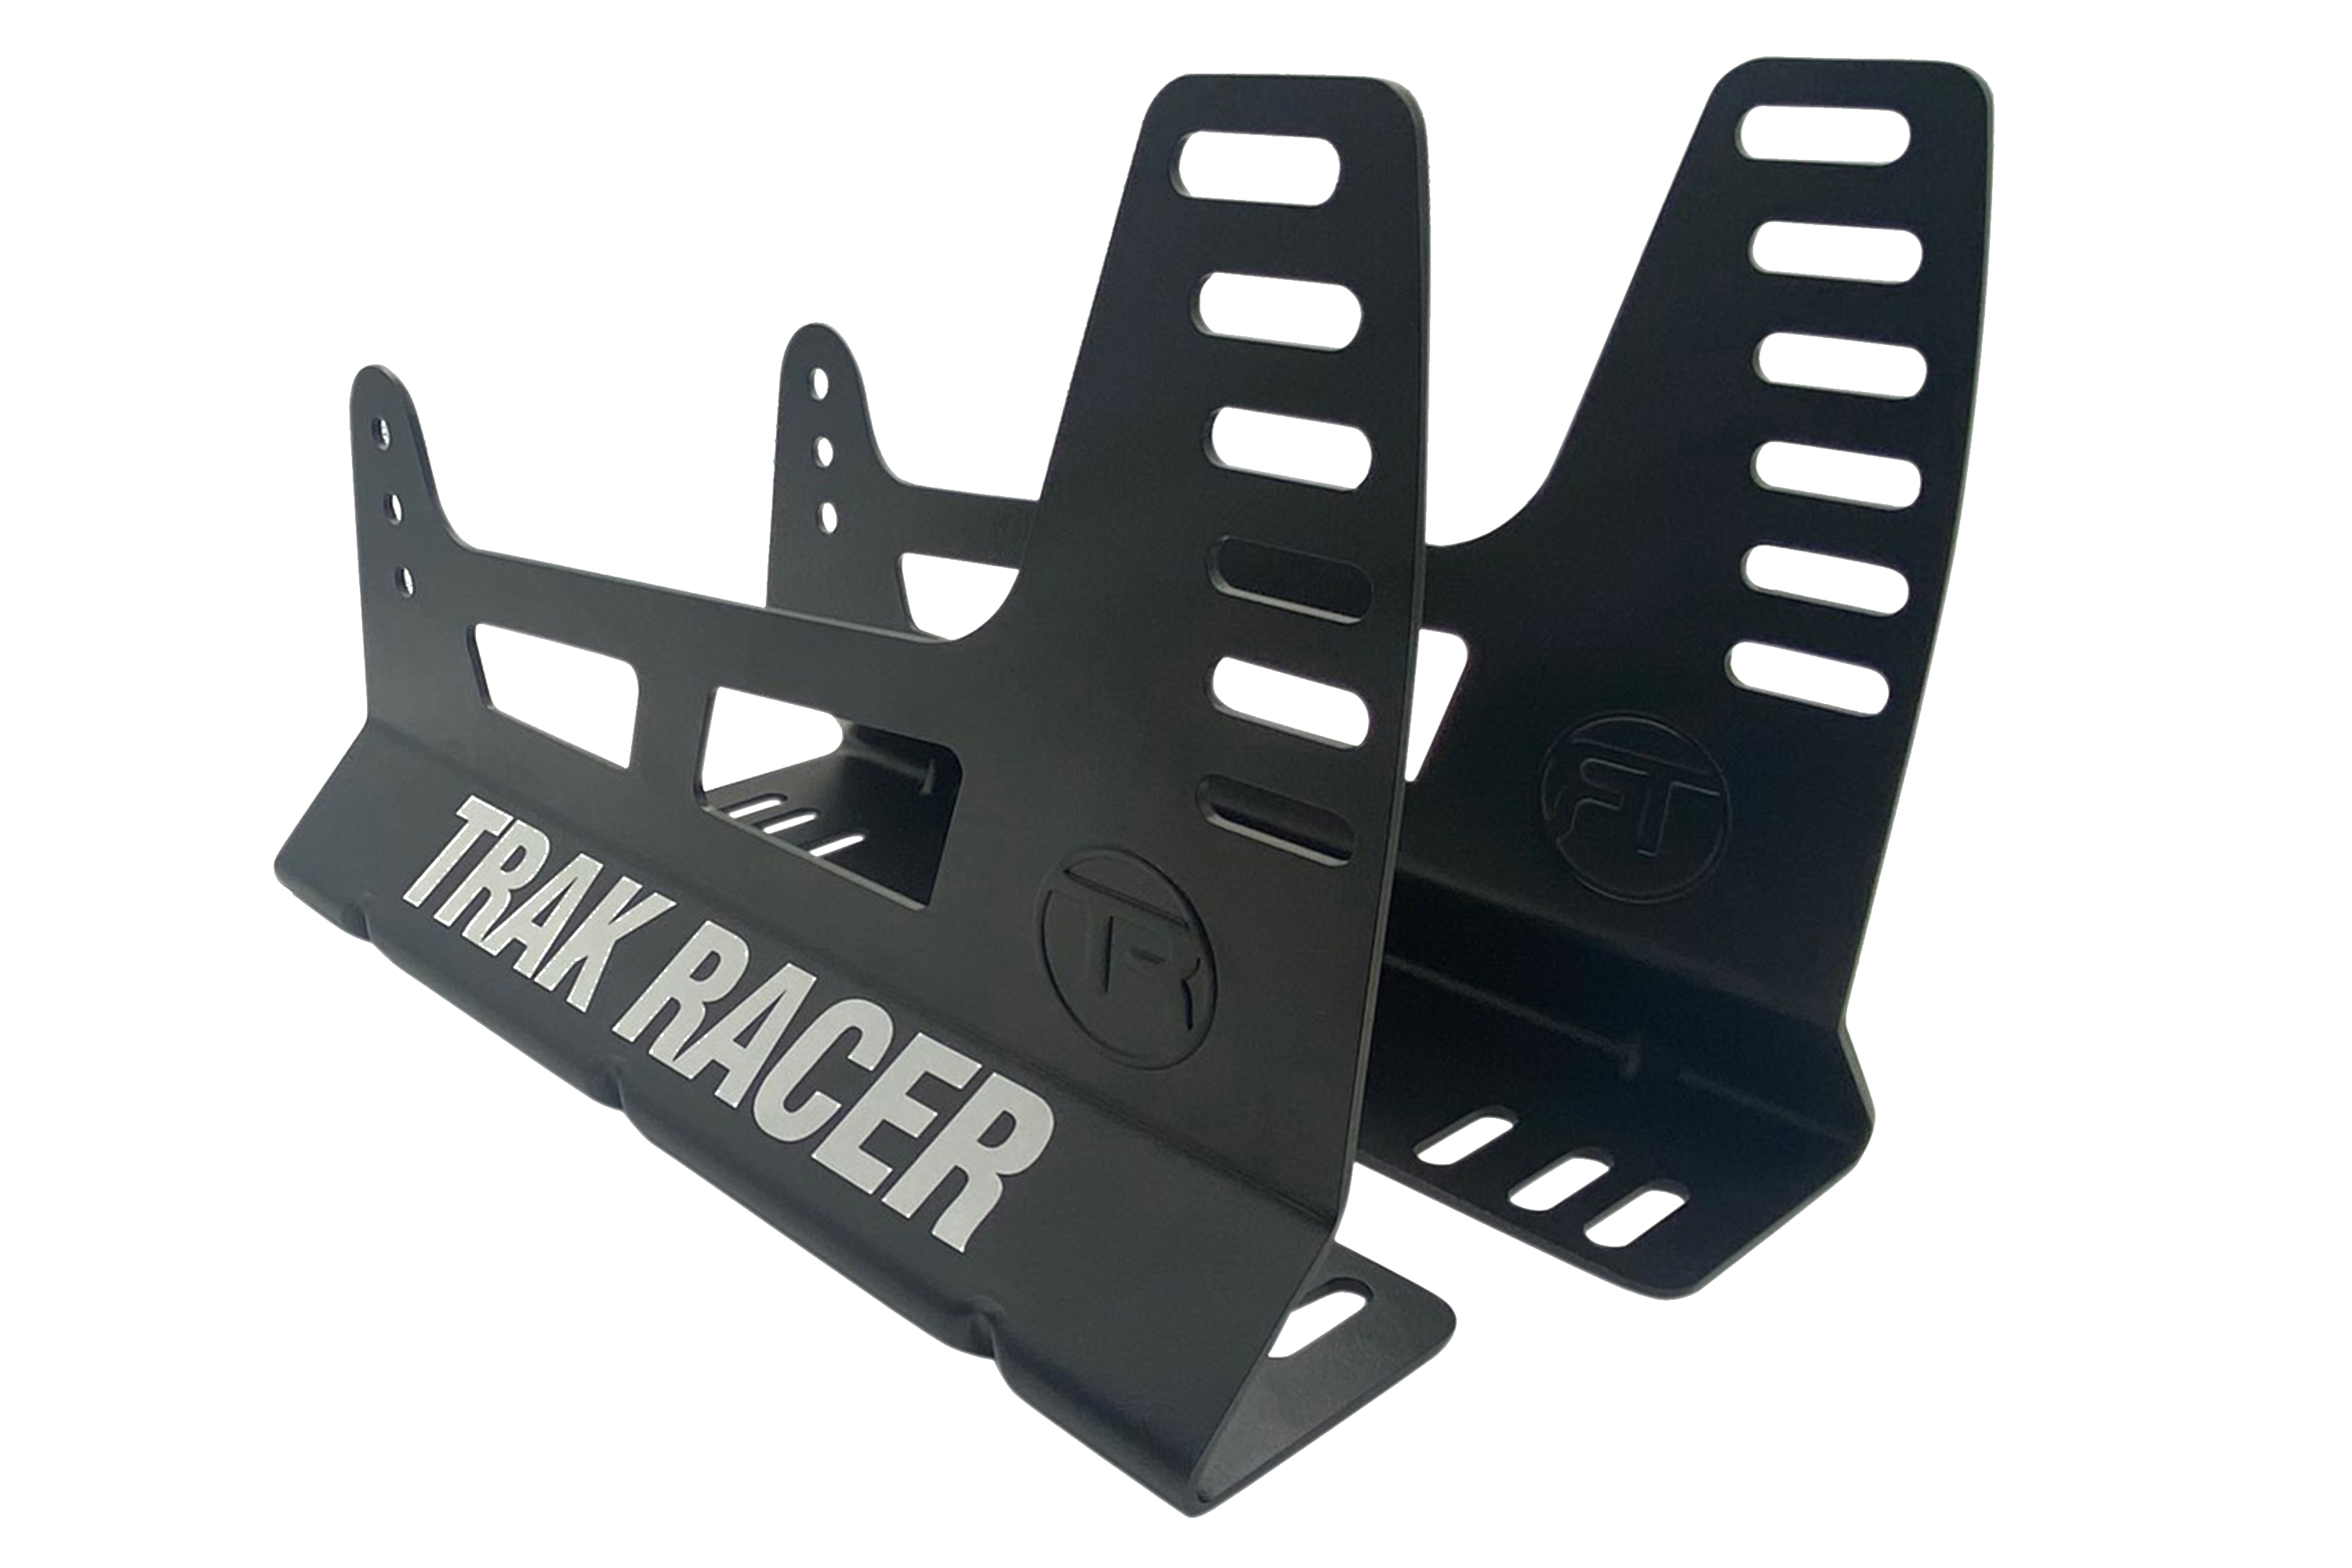 TR8 Pro Racing Simulator – Trak Racer